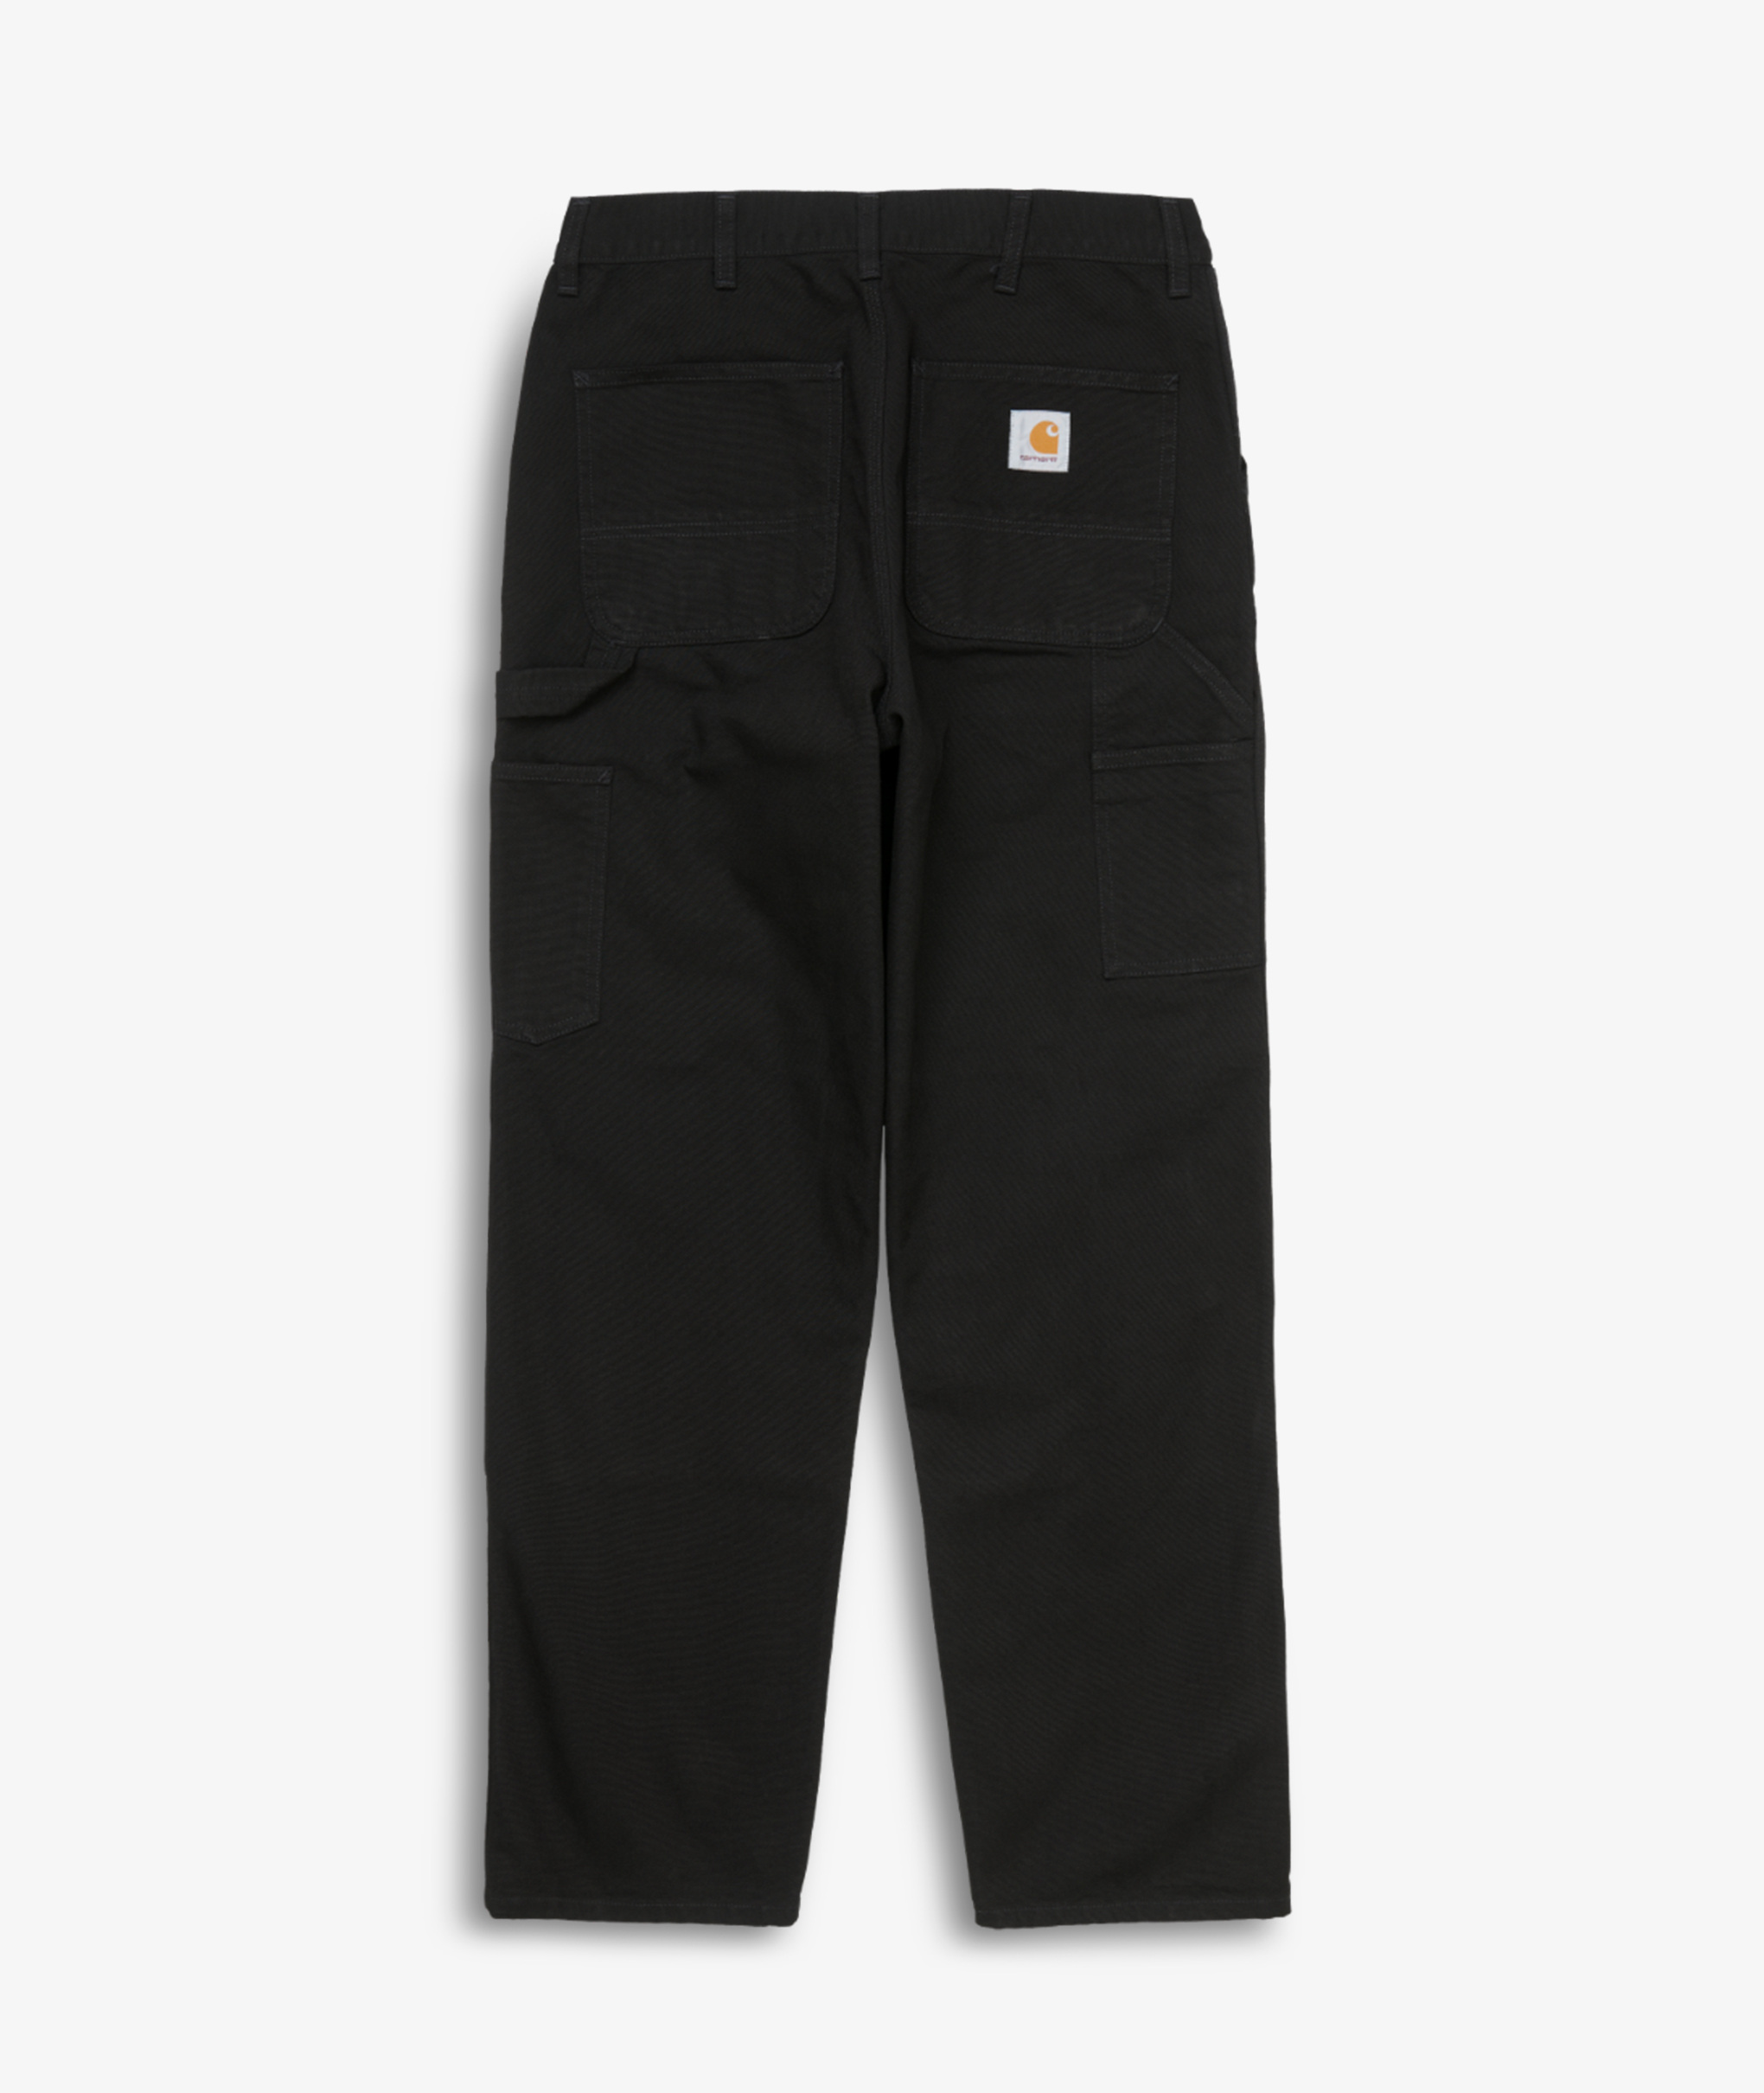 double knee pant men black in cotton - CARHARTT WIP - d — 2